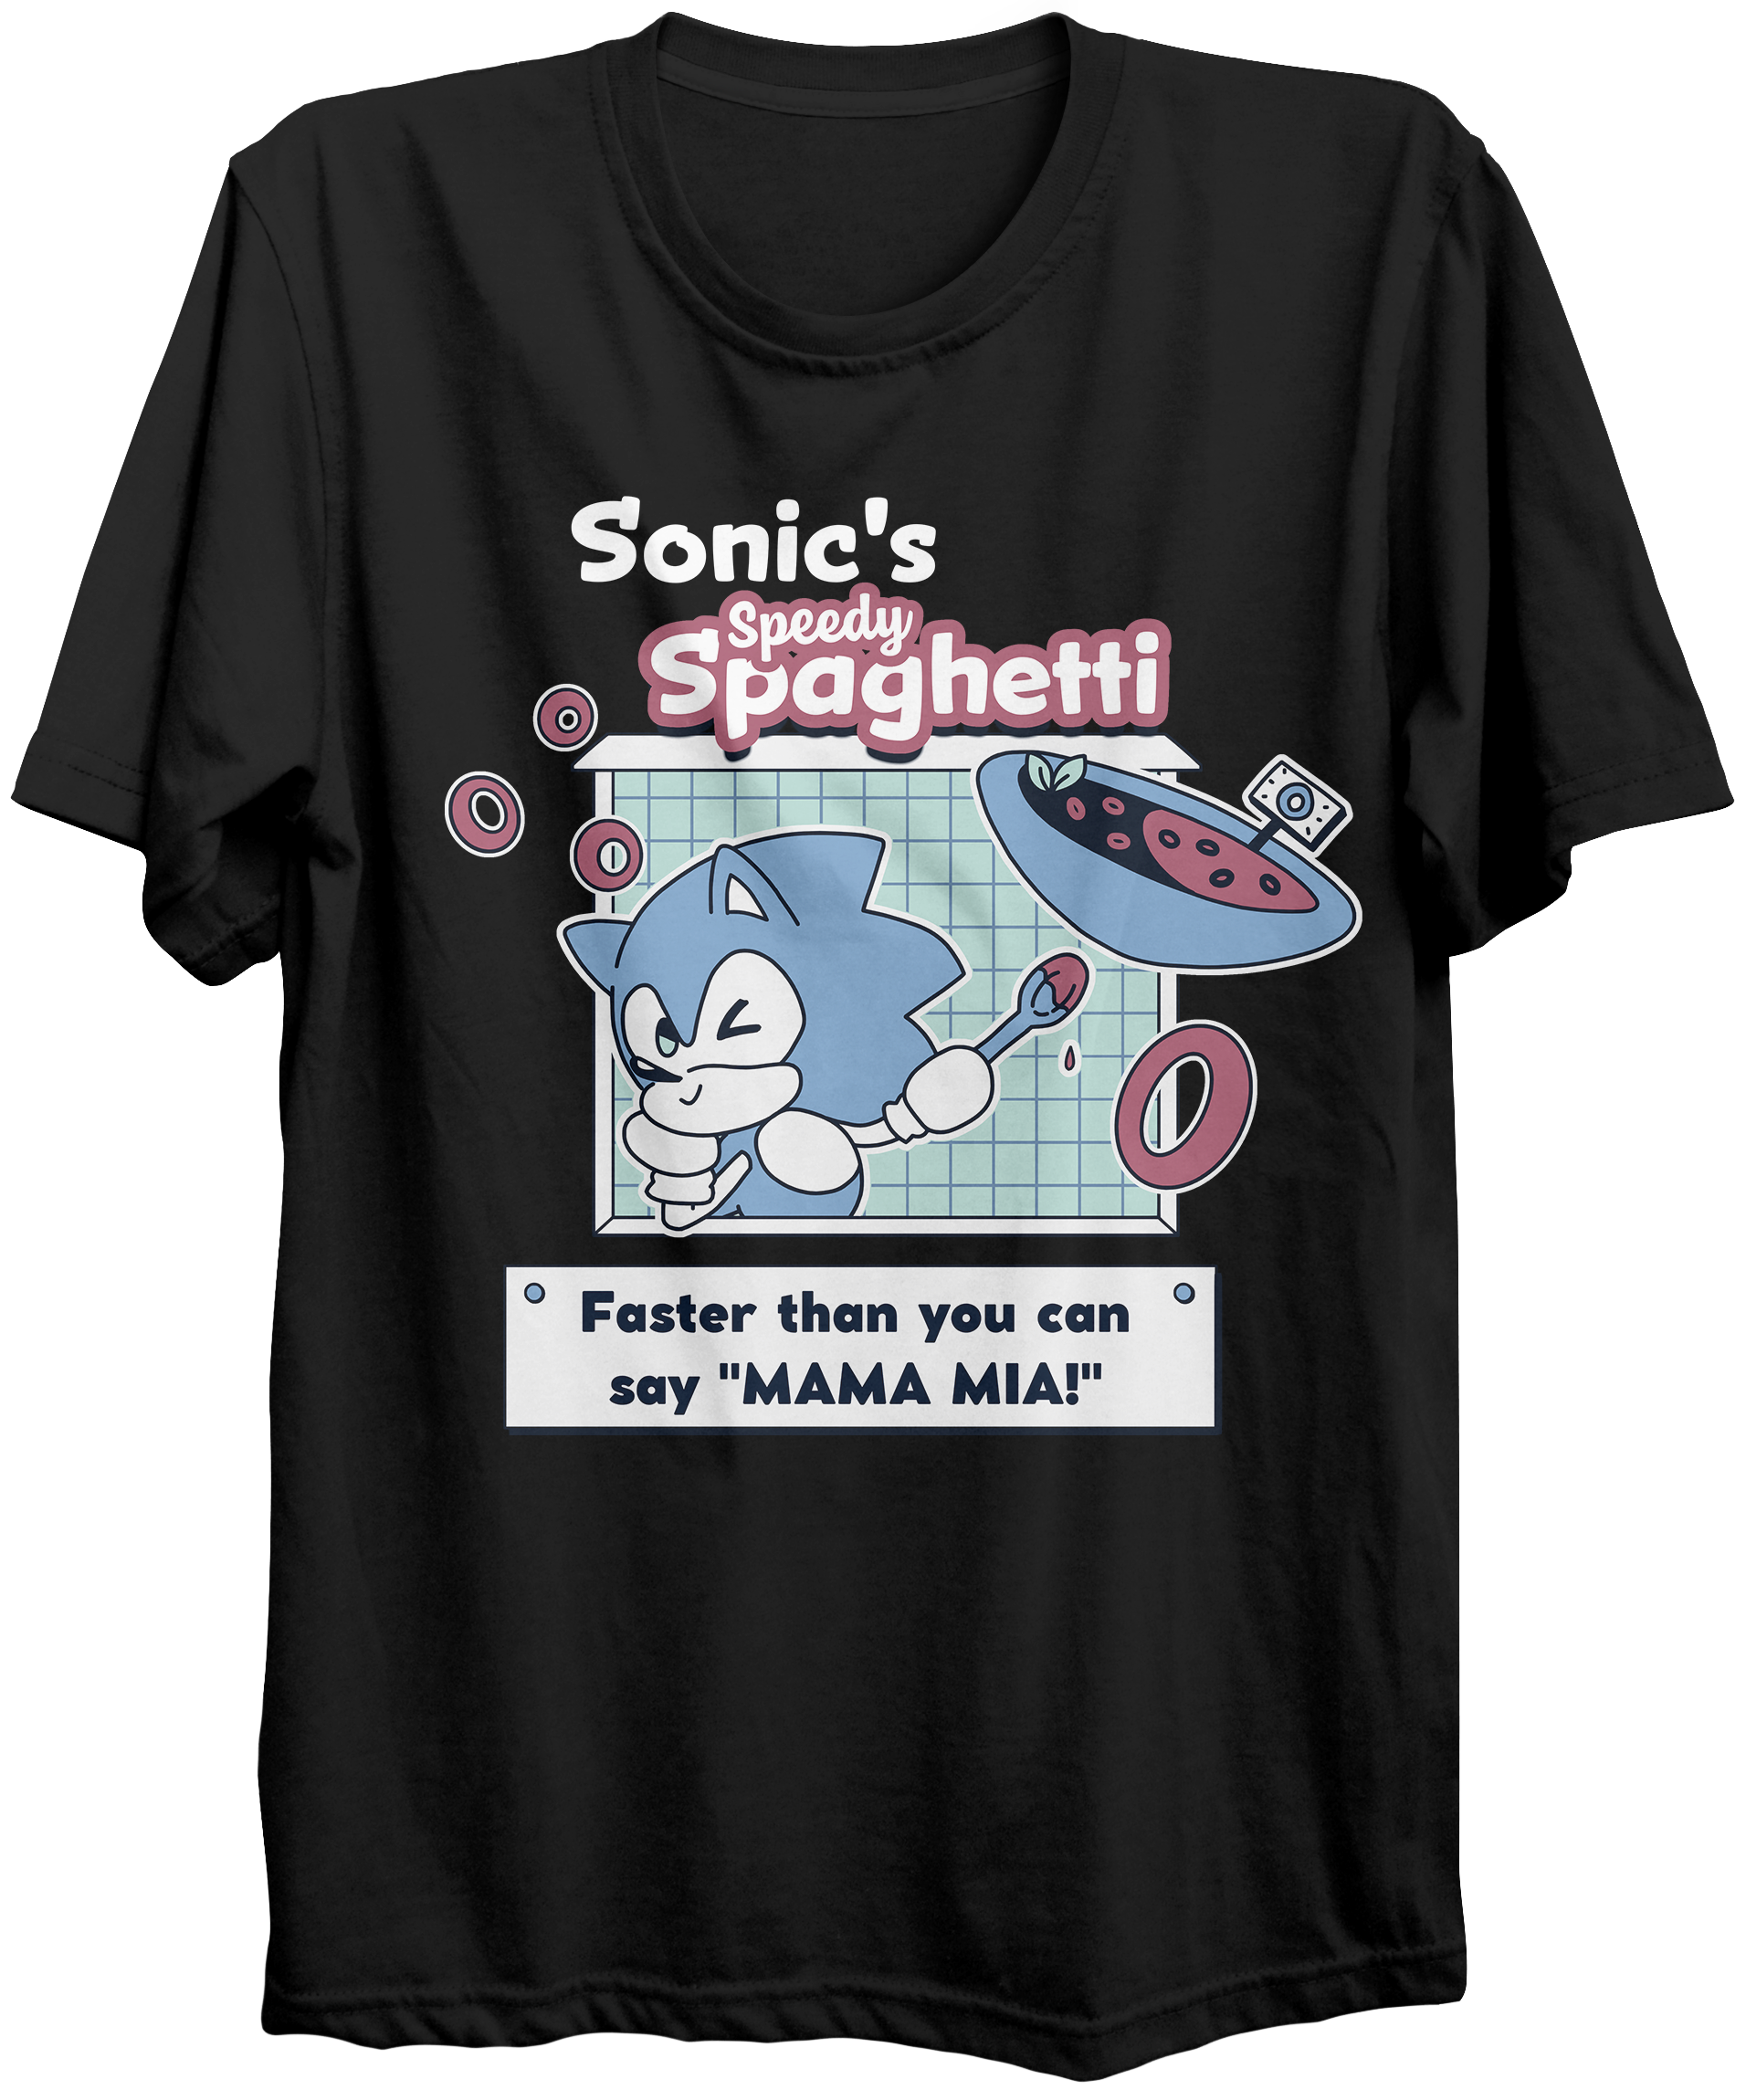 Sonic's Speedy Spaghetti!